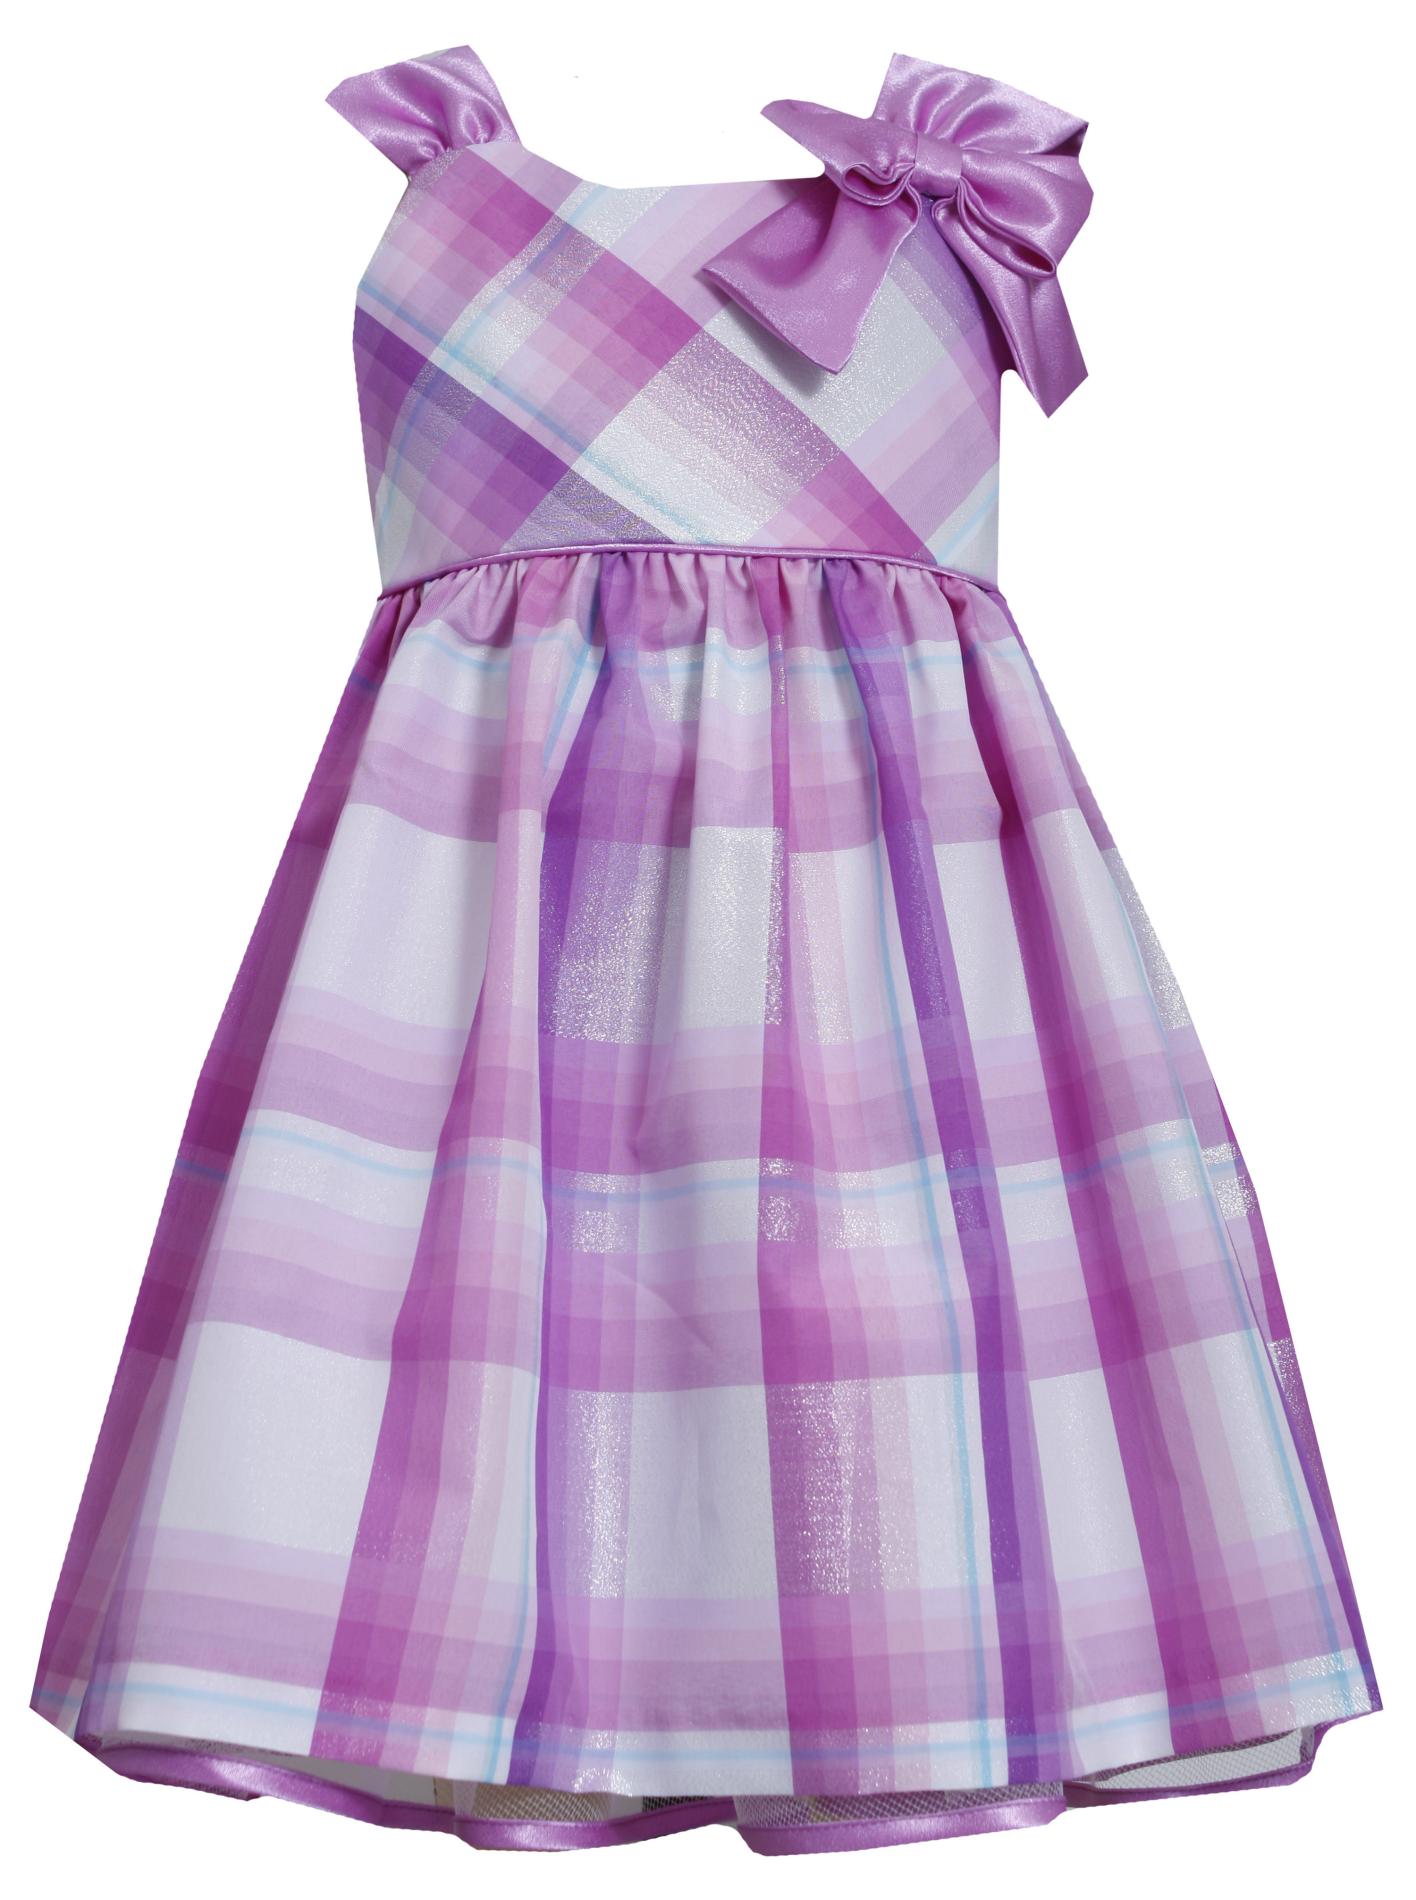 Ashley Ann Girl's Party Dress - Purple Plaid